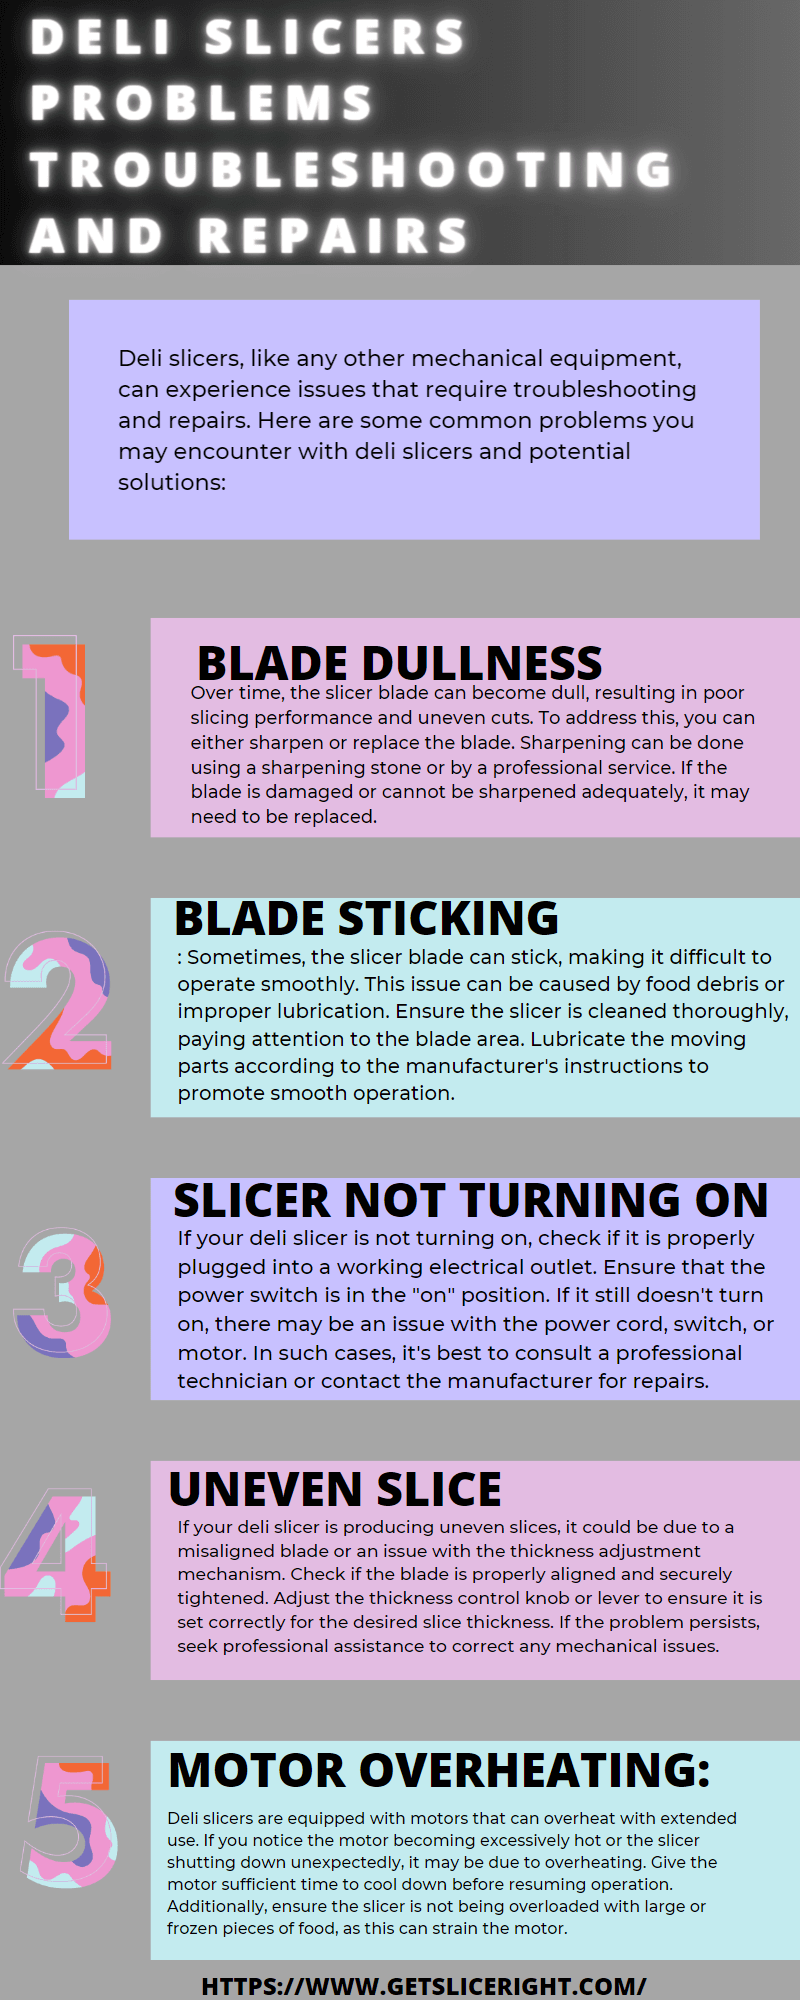 Deli slicer problems troubleshooting - Getsliceright Infographic